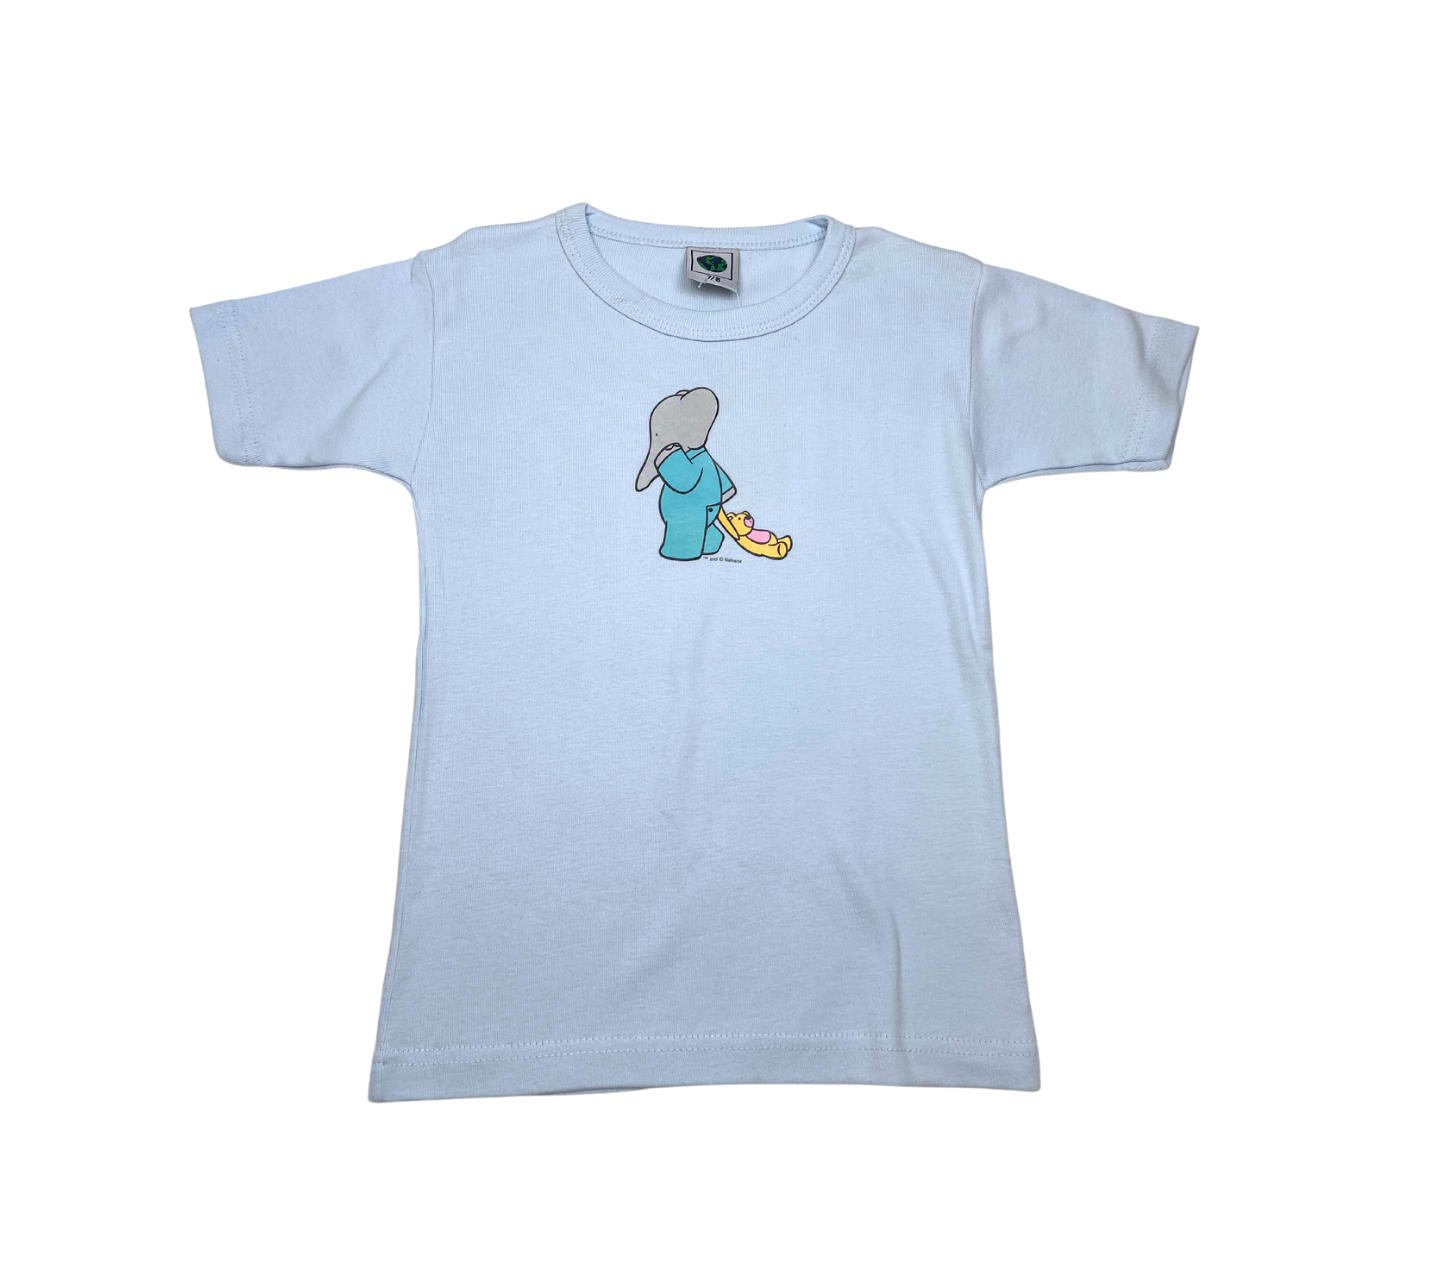 VINTAGE - T-shirt bleu clair Babar - 7/8 ans